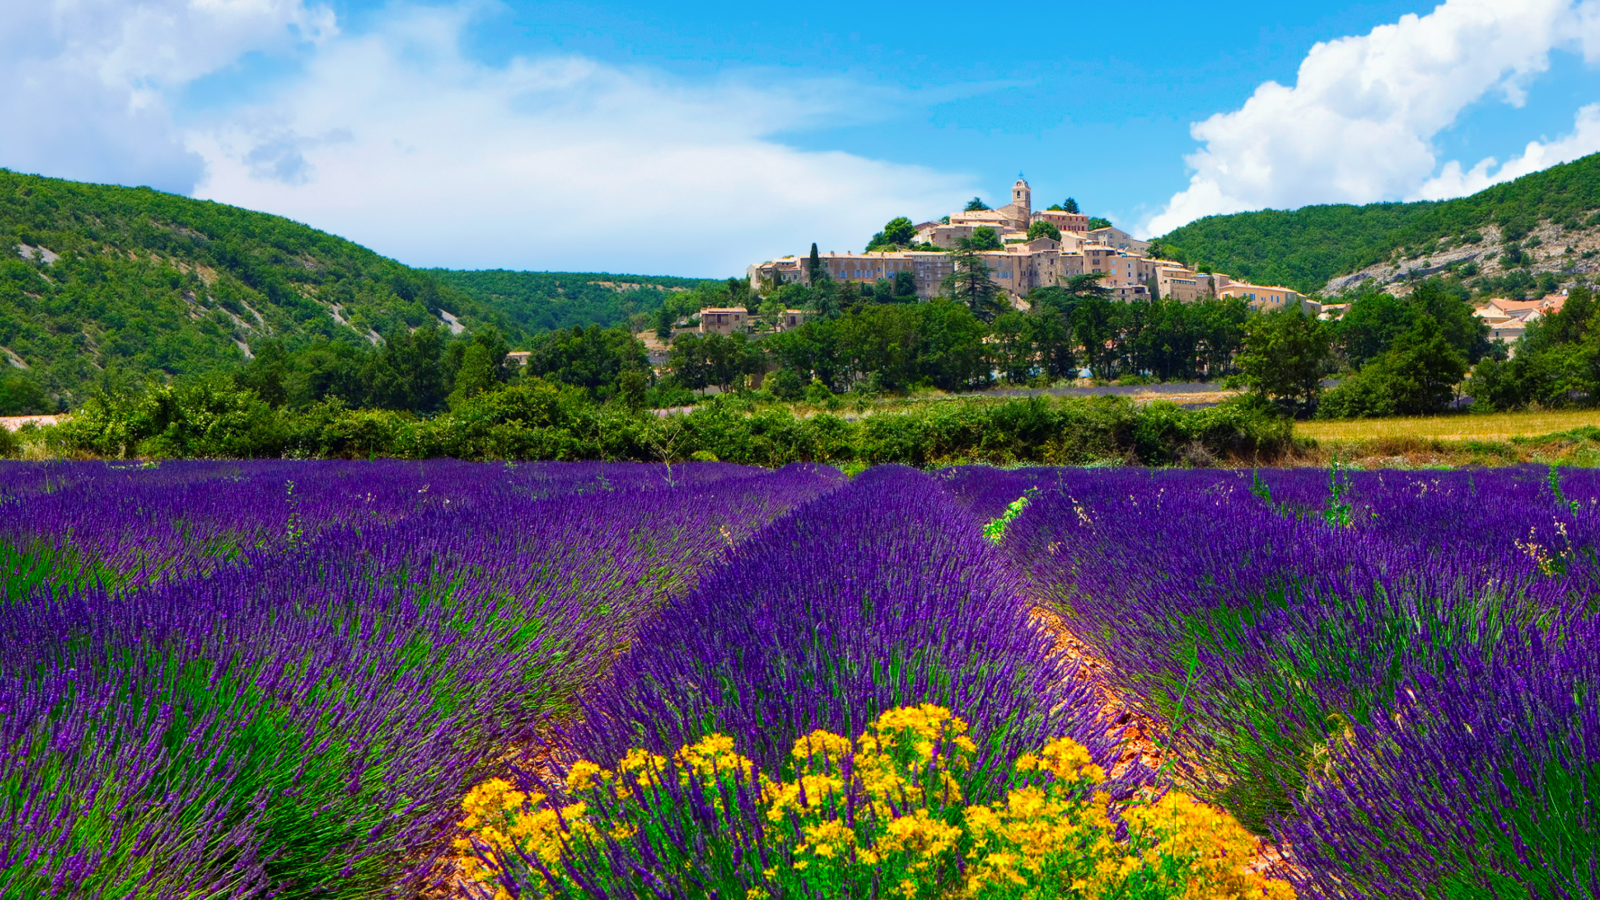 Lavender Field In Provence France Wallpaper For Widescreen Desktop Pc